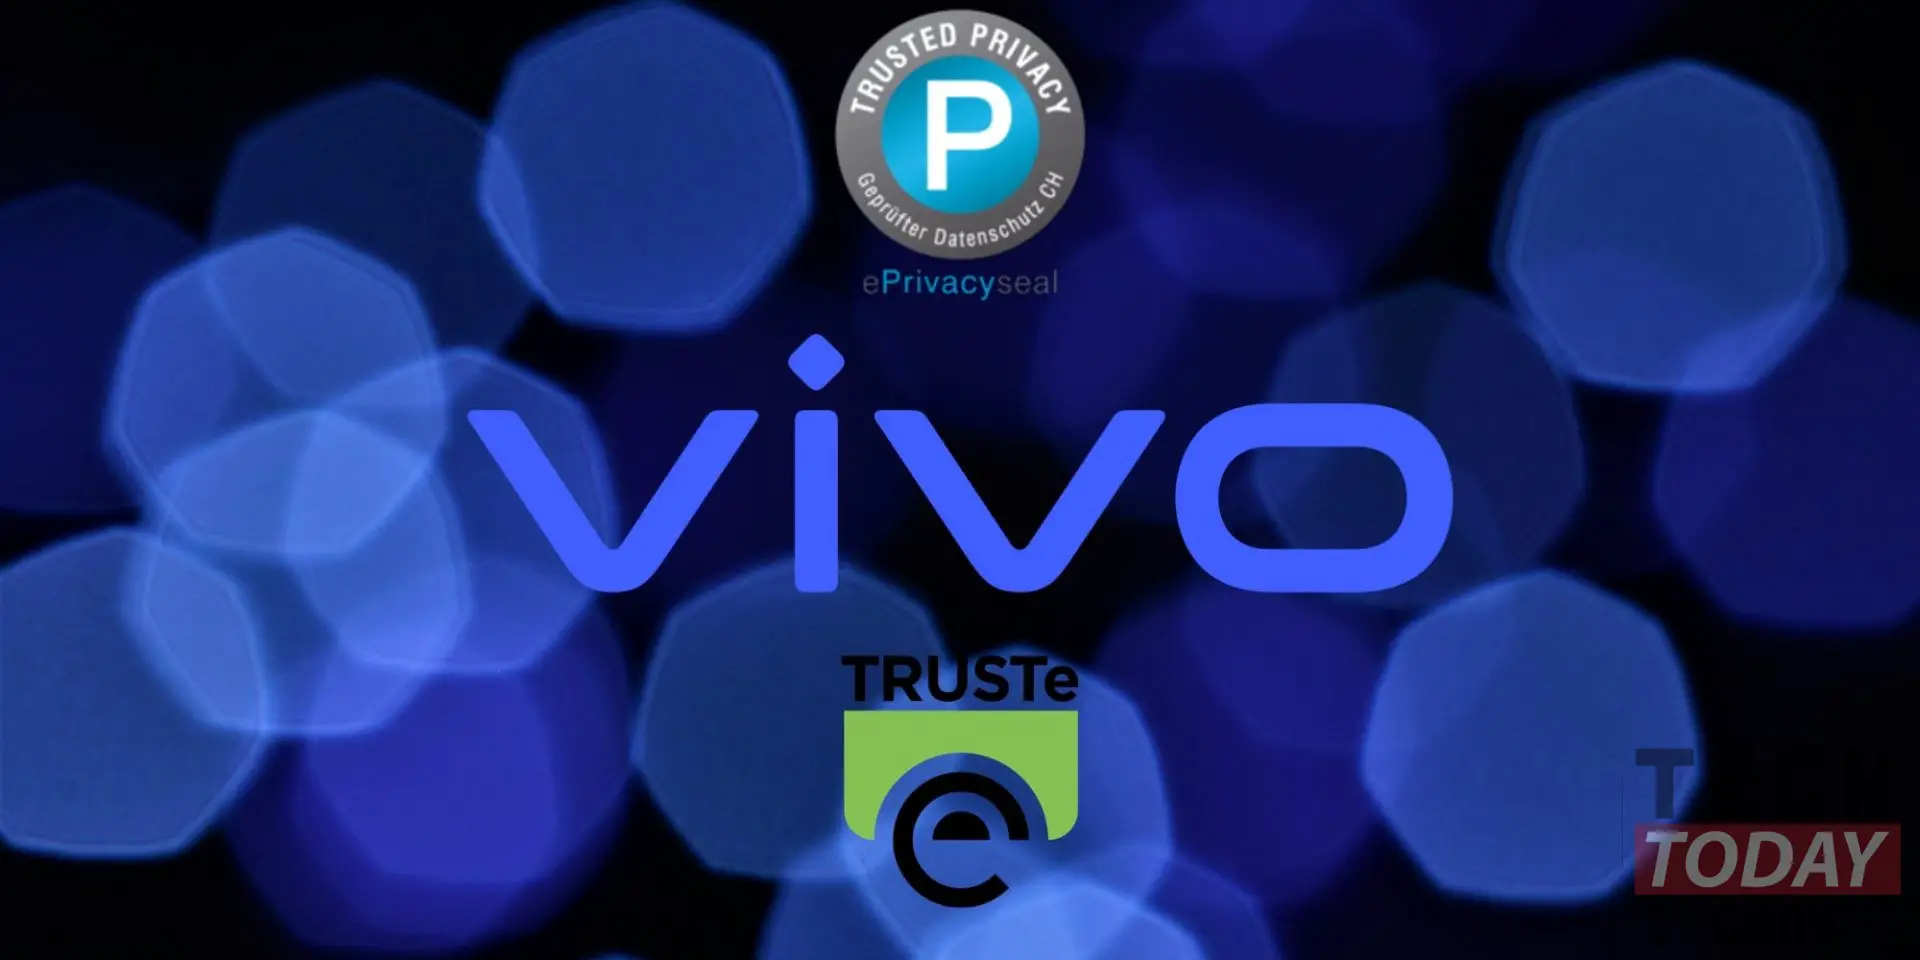 vivo sertifisering personvern tillit og eprivacyseal